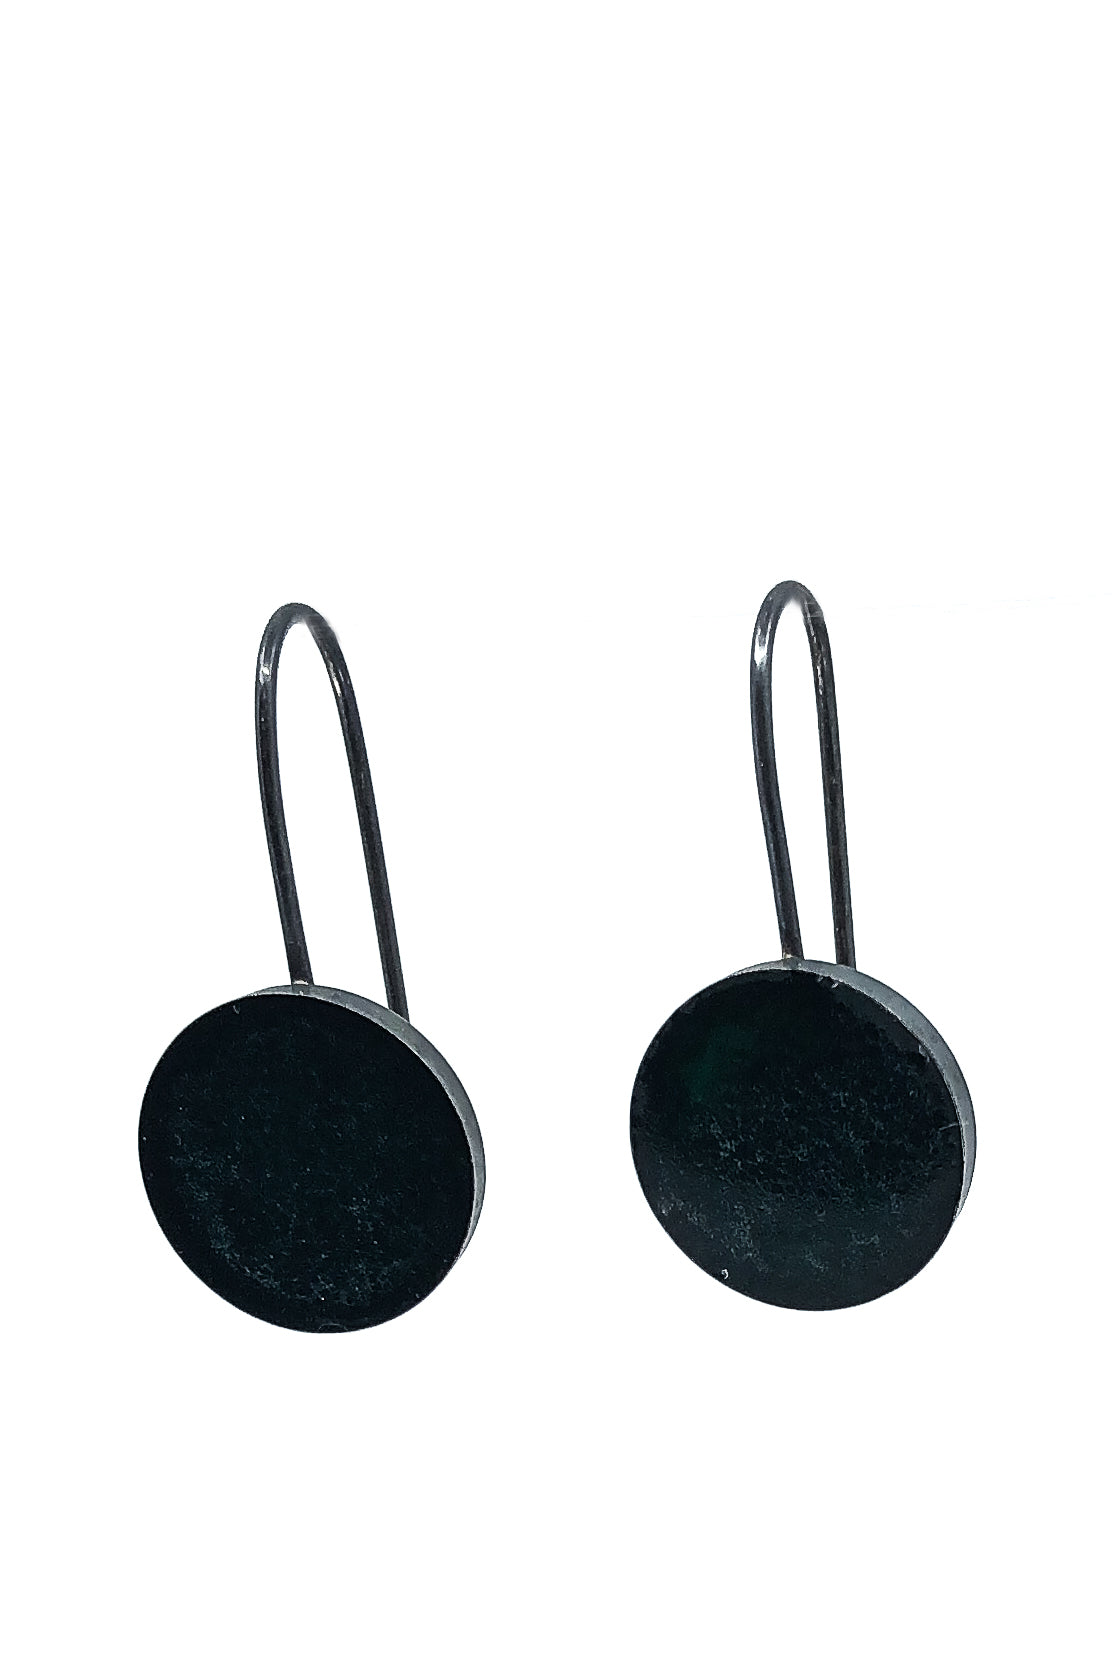 minimalist simple drop earrings in oxidised 925 sterling silver filled with dark green nearly black resin